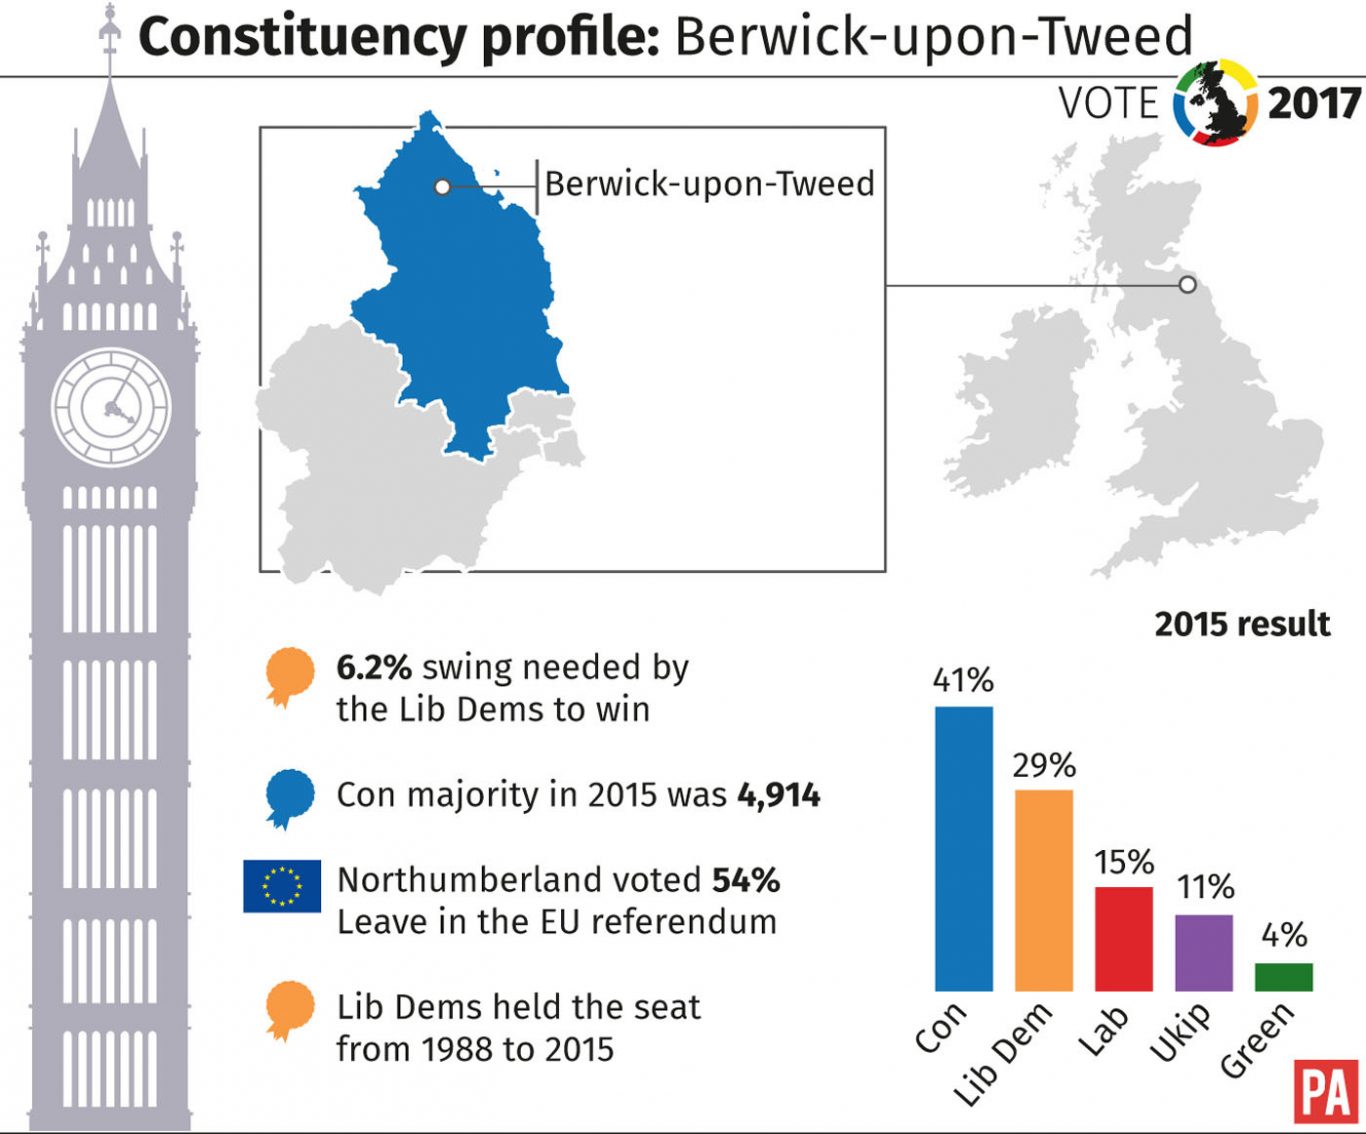 Constituency profile for Berwick-upon-Tweed